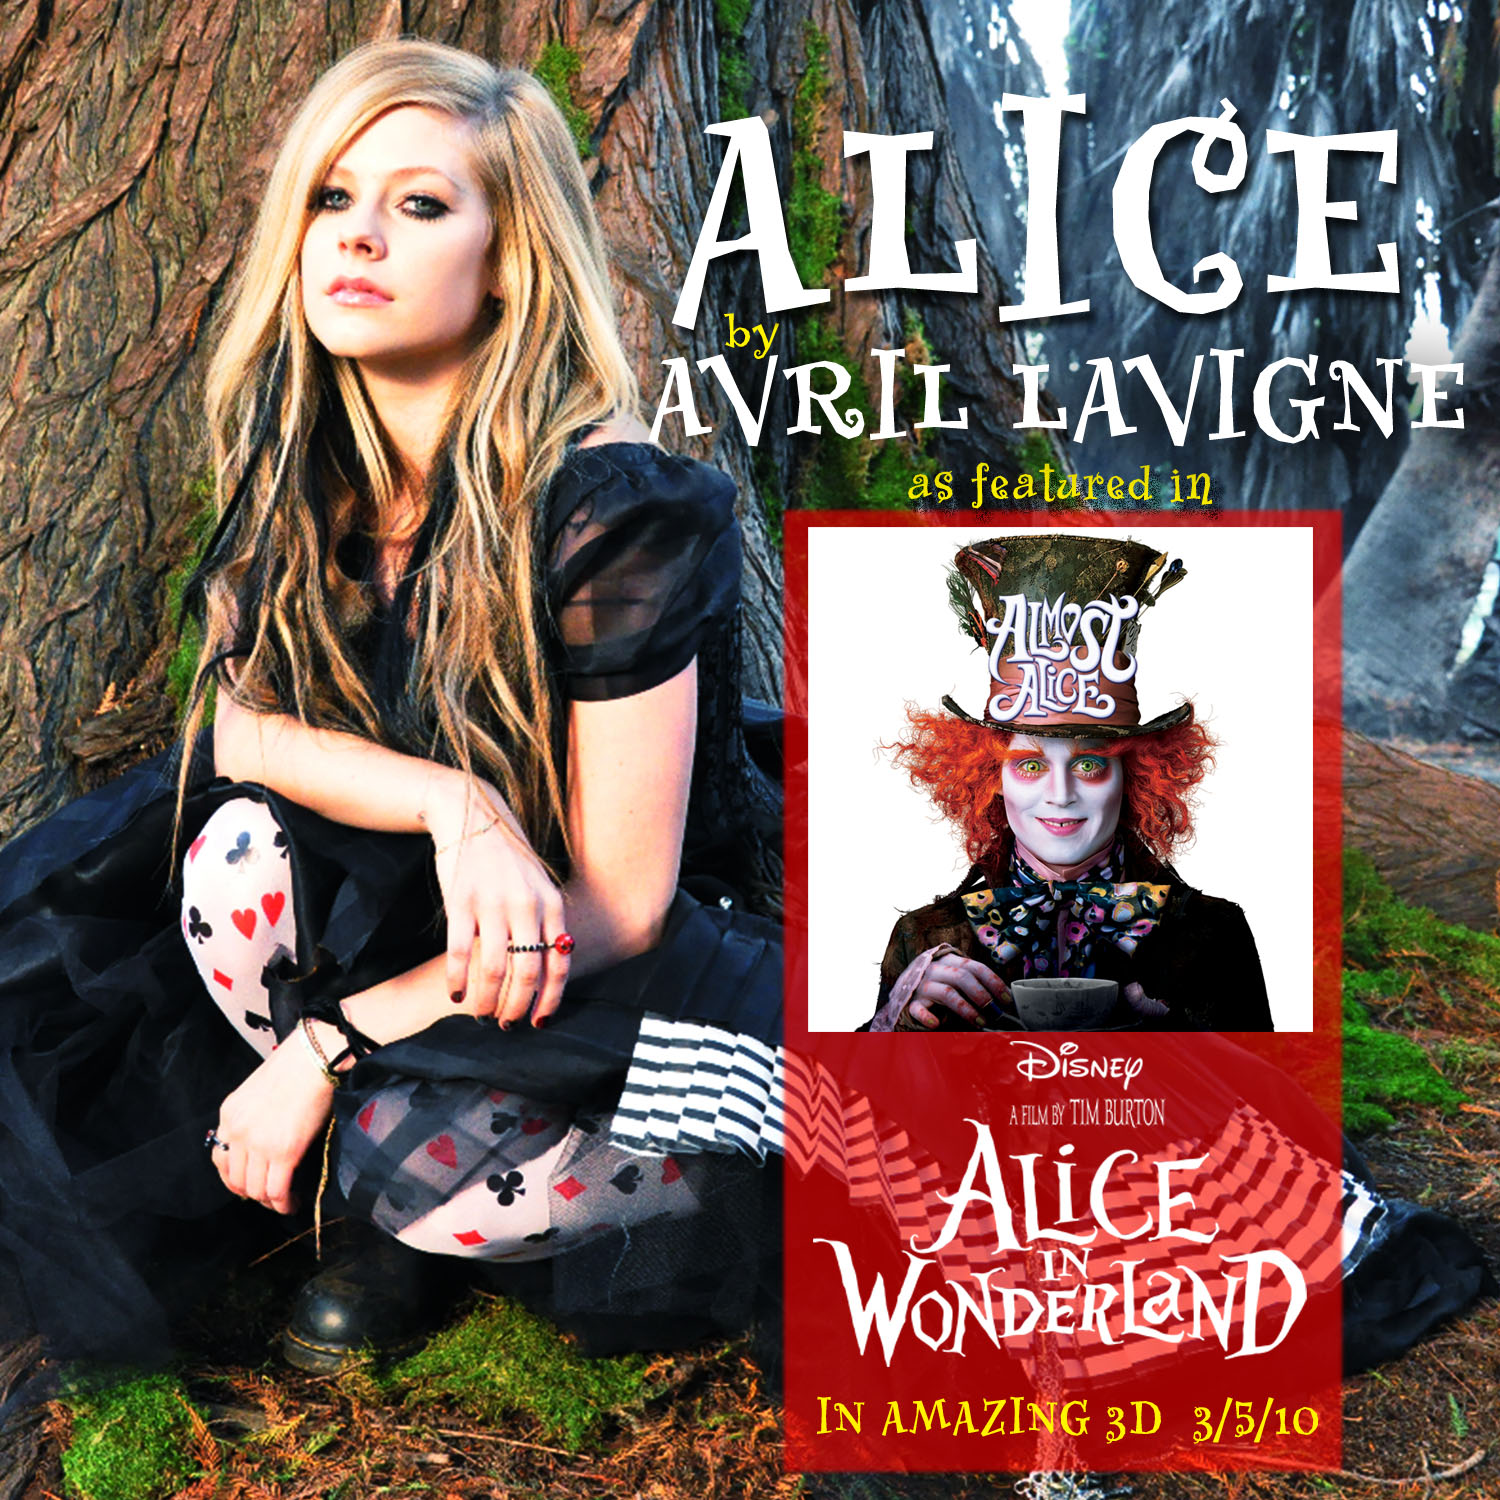 Alice in Wonderland (2010 video game) - Wikipedia